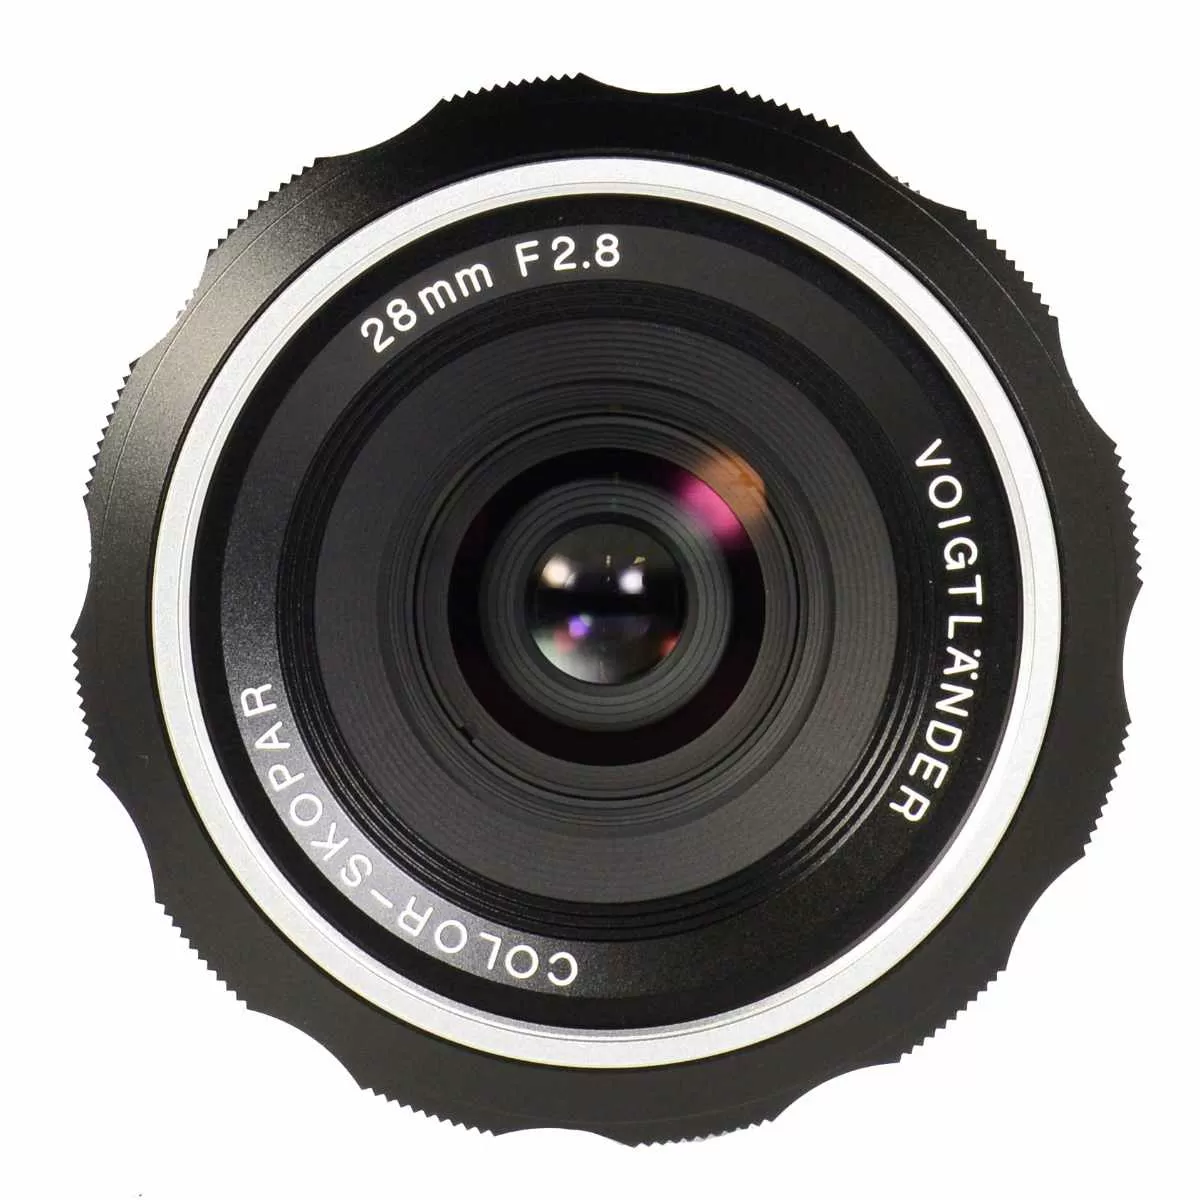 Voigtlaender Color-Skopar 28mm f/2.8 SL-II S AIS Silver Nikon F